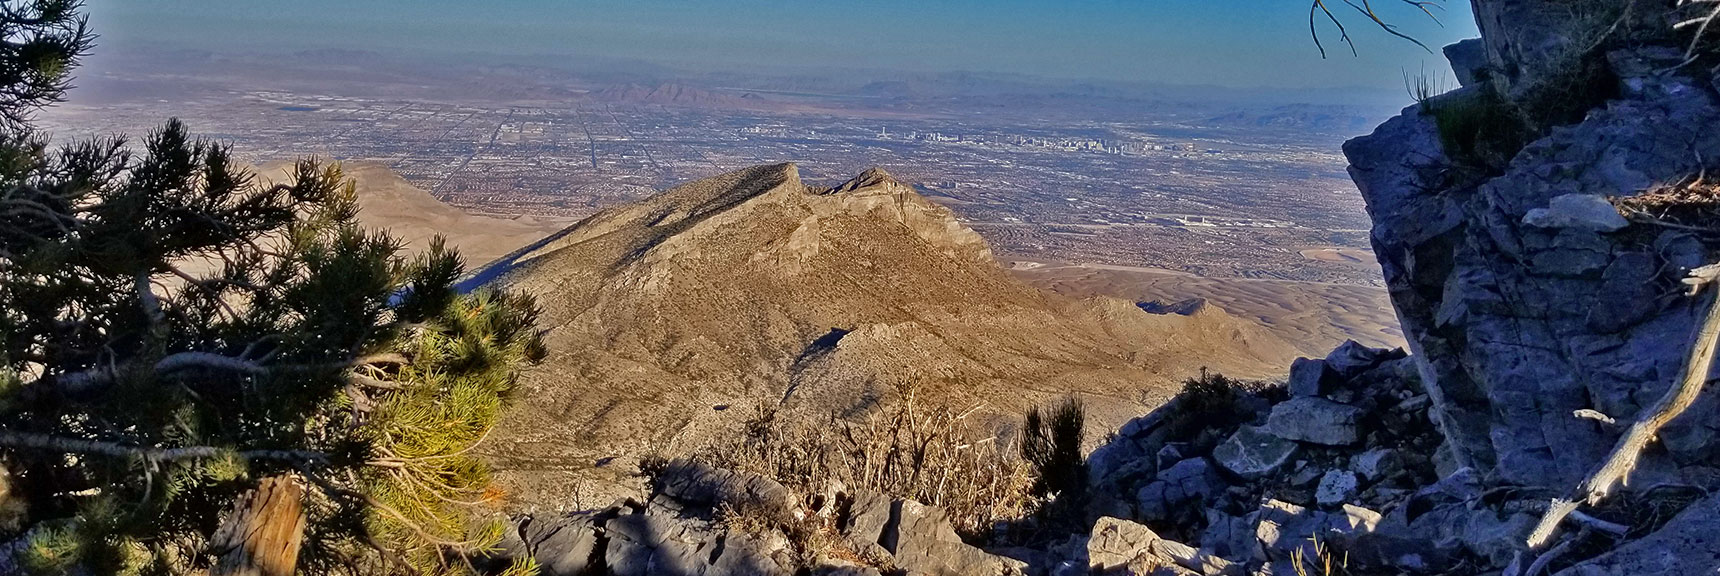 La Madre Mt, El Padre Mt, Burnt Peak Circuit | La Madre Mountains Wilderness, Nevada | Overview